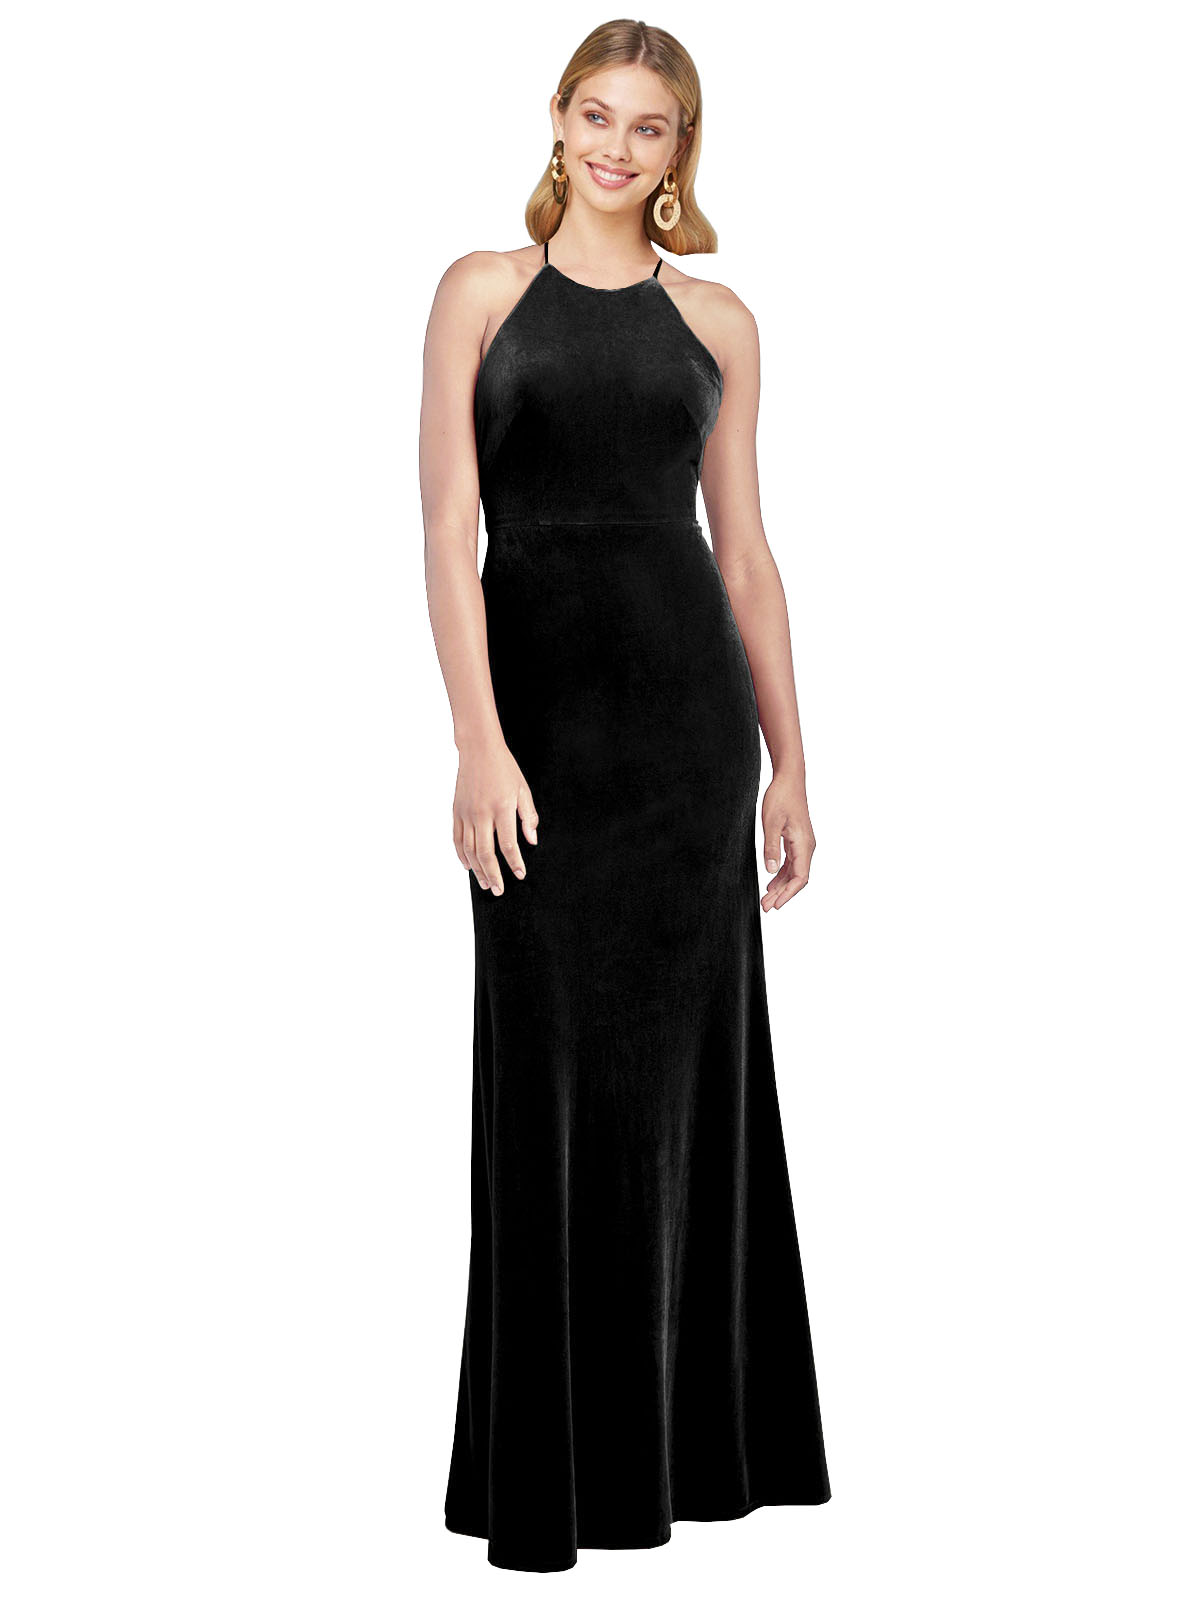 Black A-Line Halter High Neck Long Sleeveless Stretch Velvet Bridesmaid Dress Salem